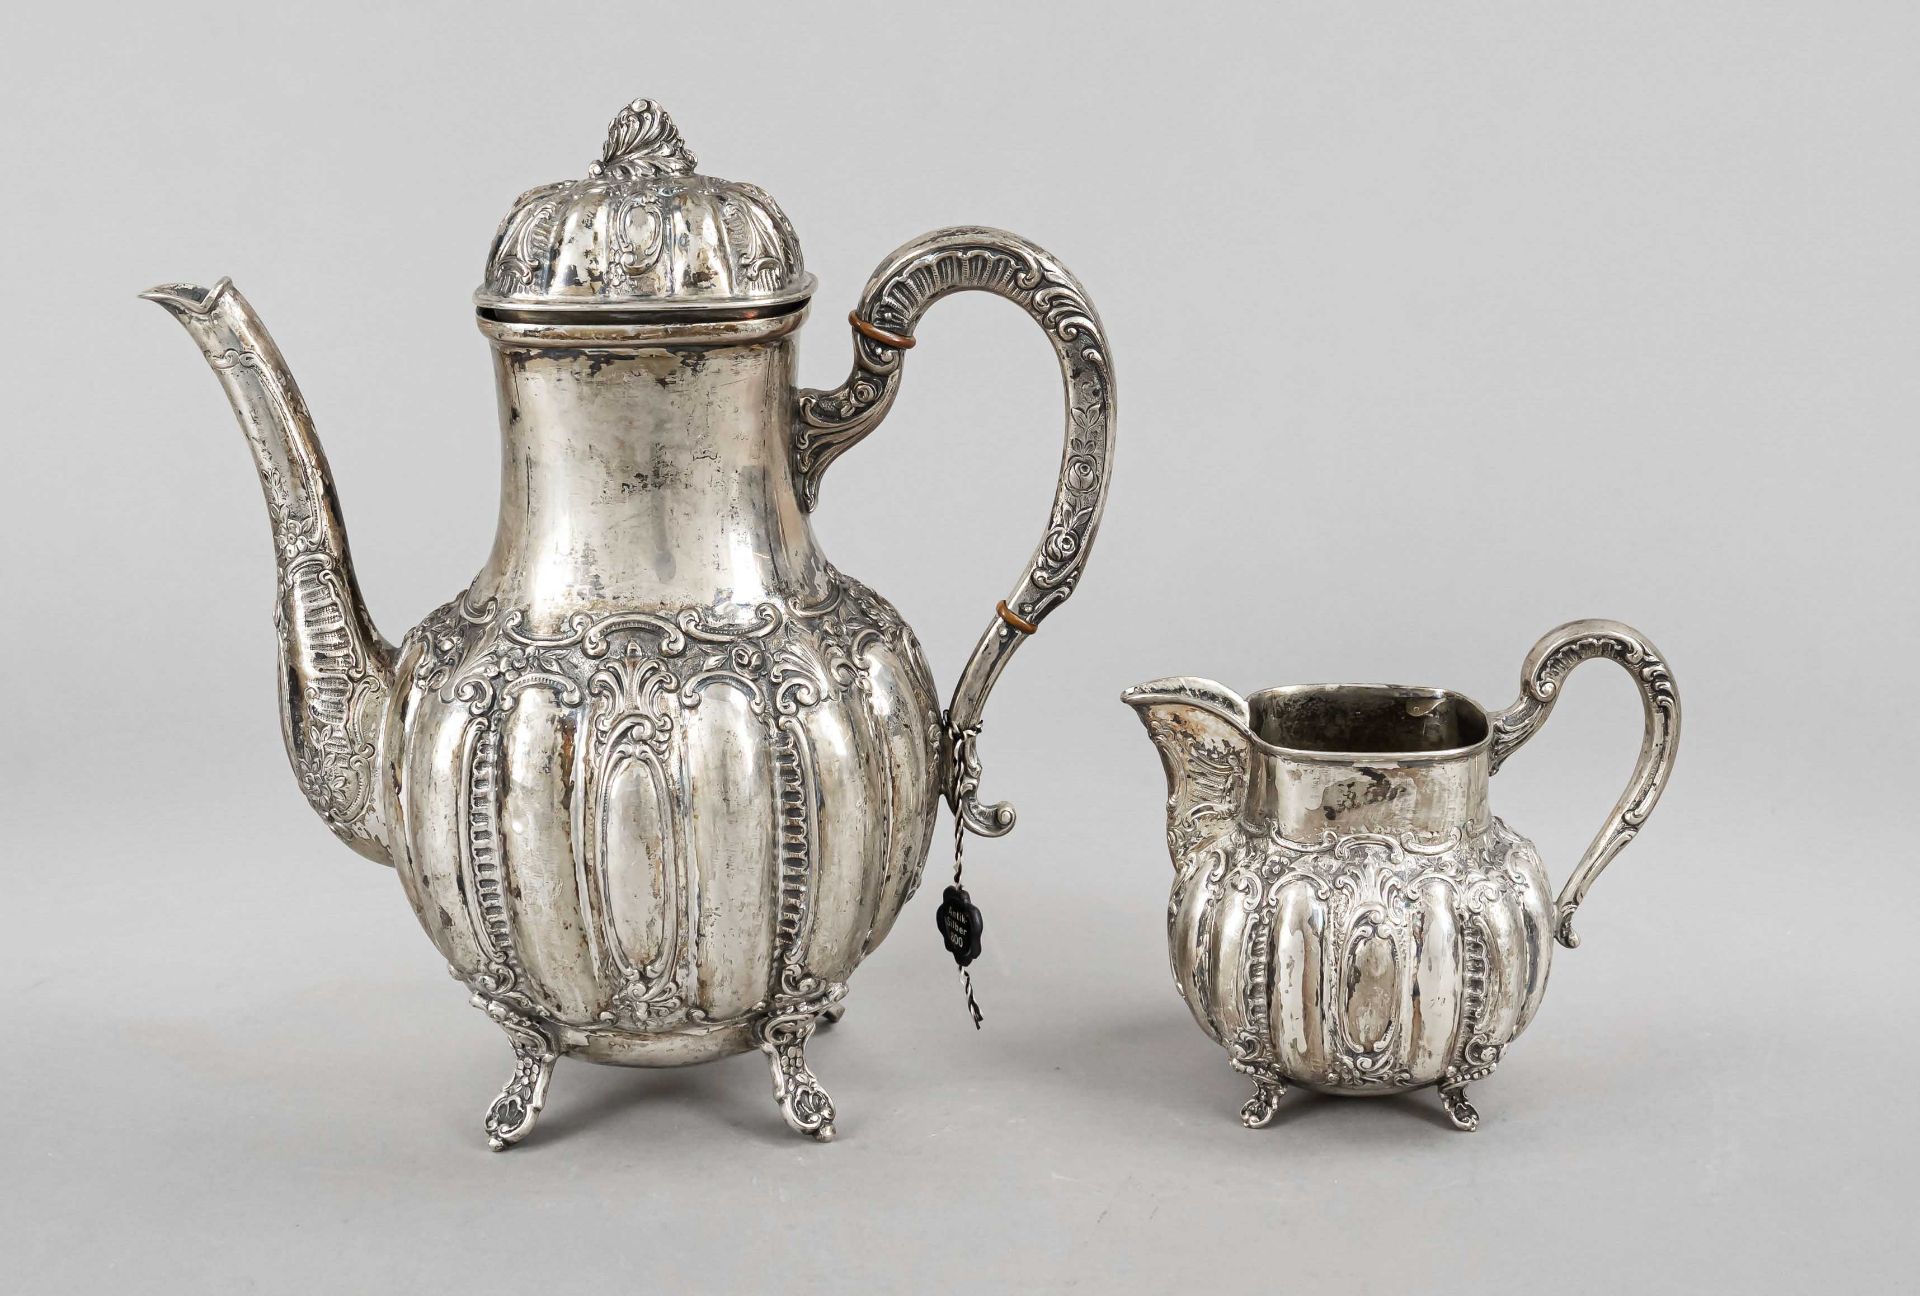 Coffee pot and cream jug, German, 20th century, maker's mark Adam Manns & Sohn, Dörnigheim, silver